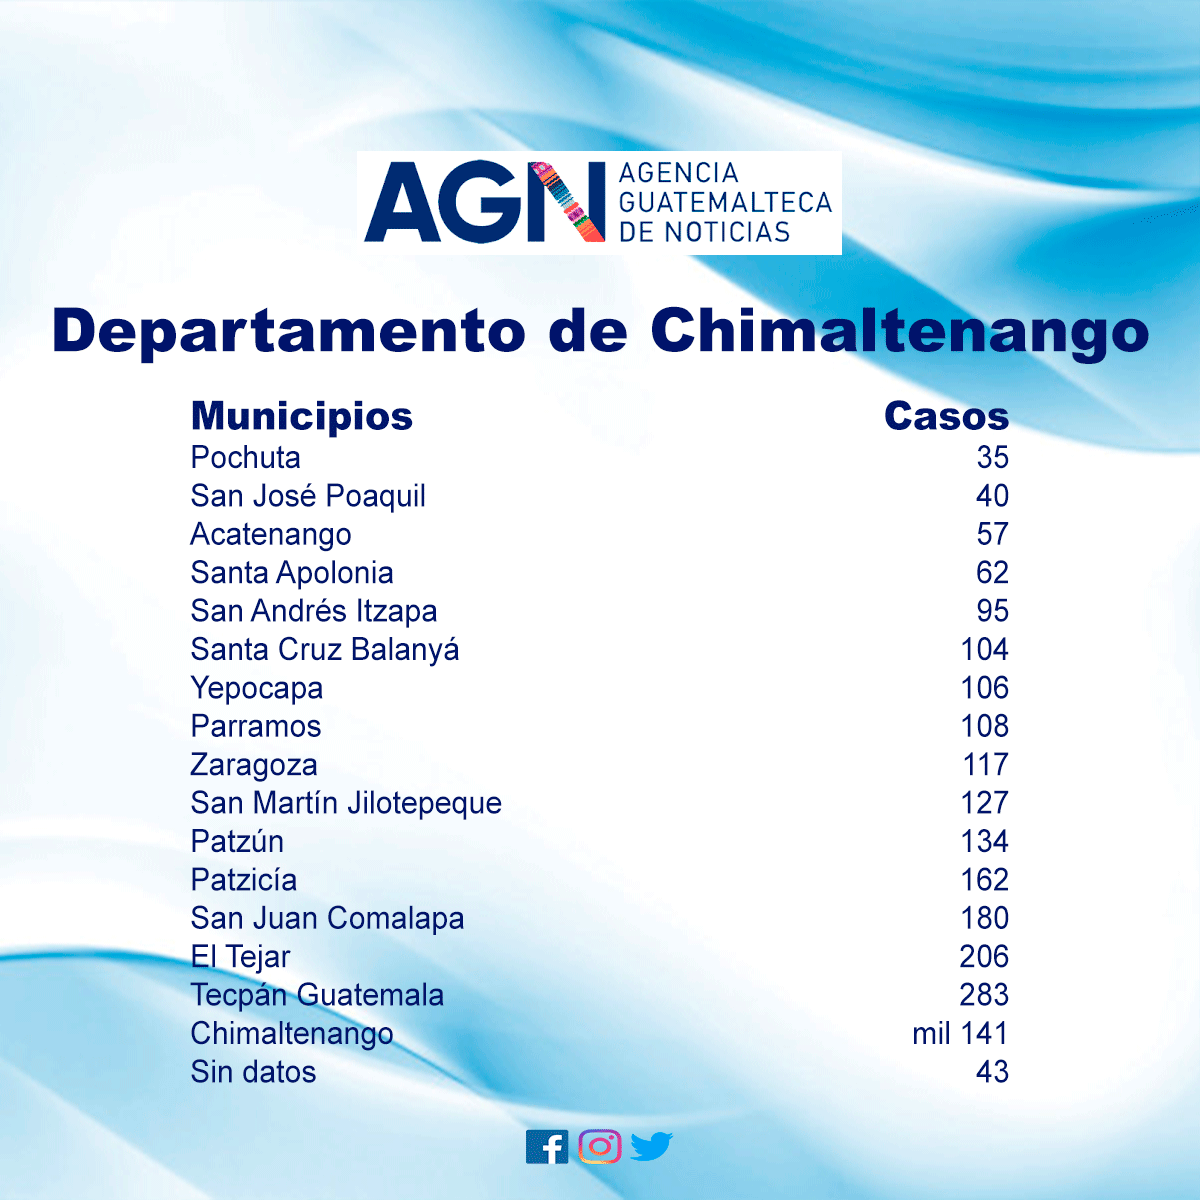 Dos municipios de Chimaltenango reflejan menos casos registrados de coronavirus.